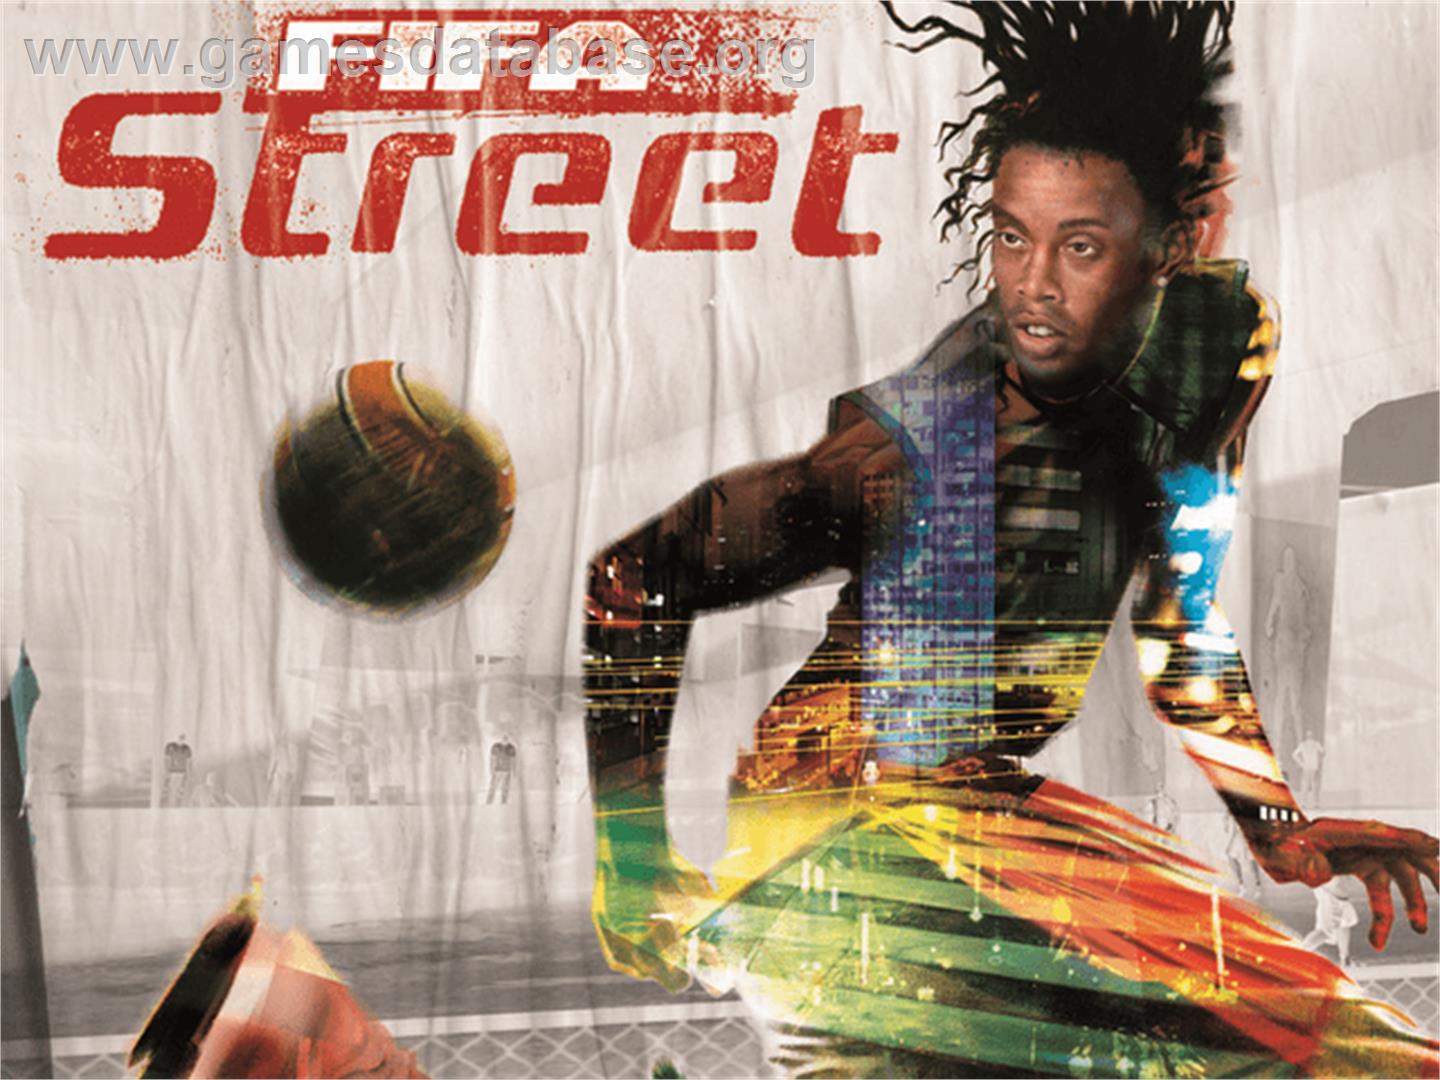 FIFA Street - Microsoft Xbox - Artwork - Title Screen